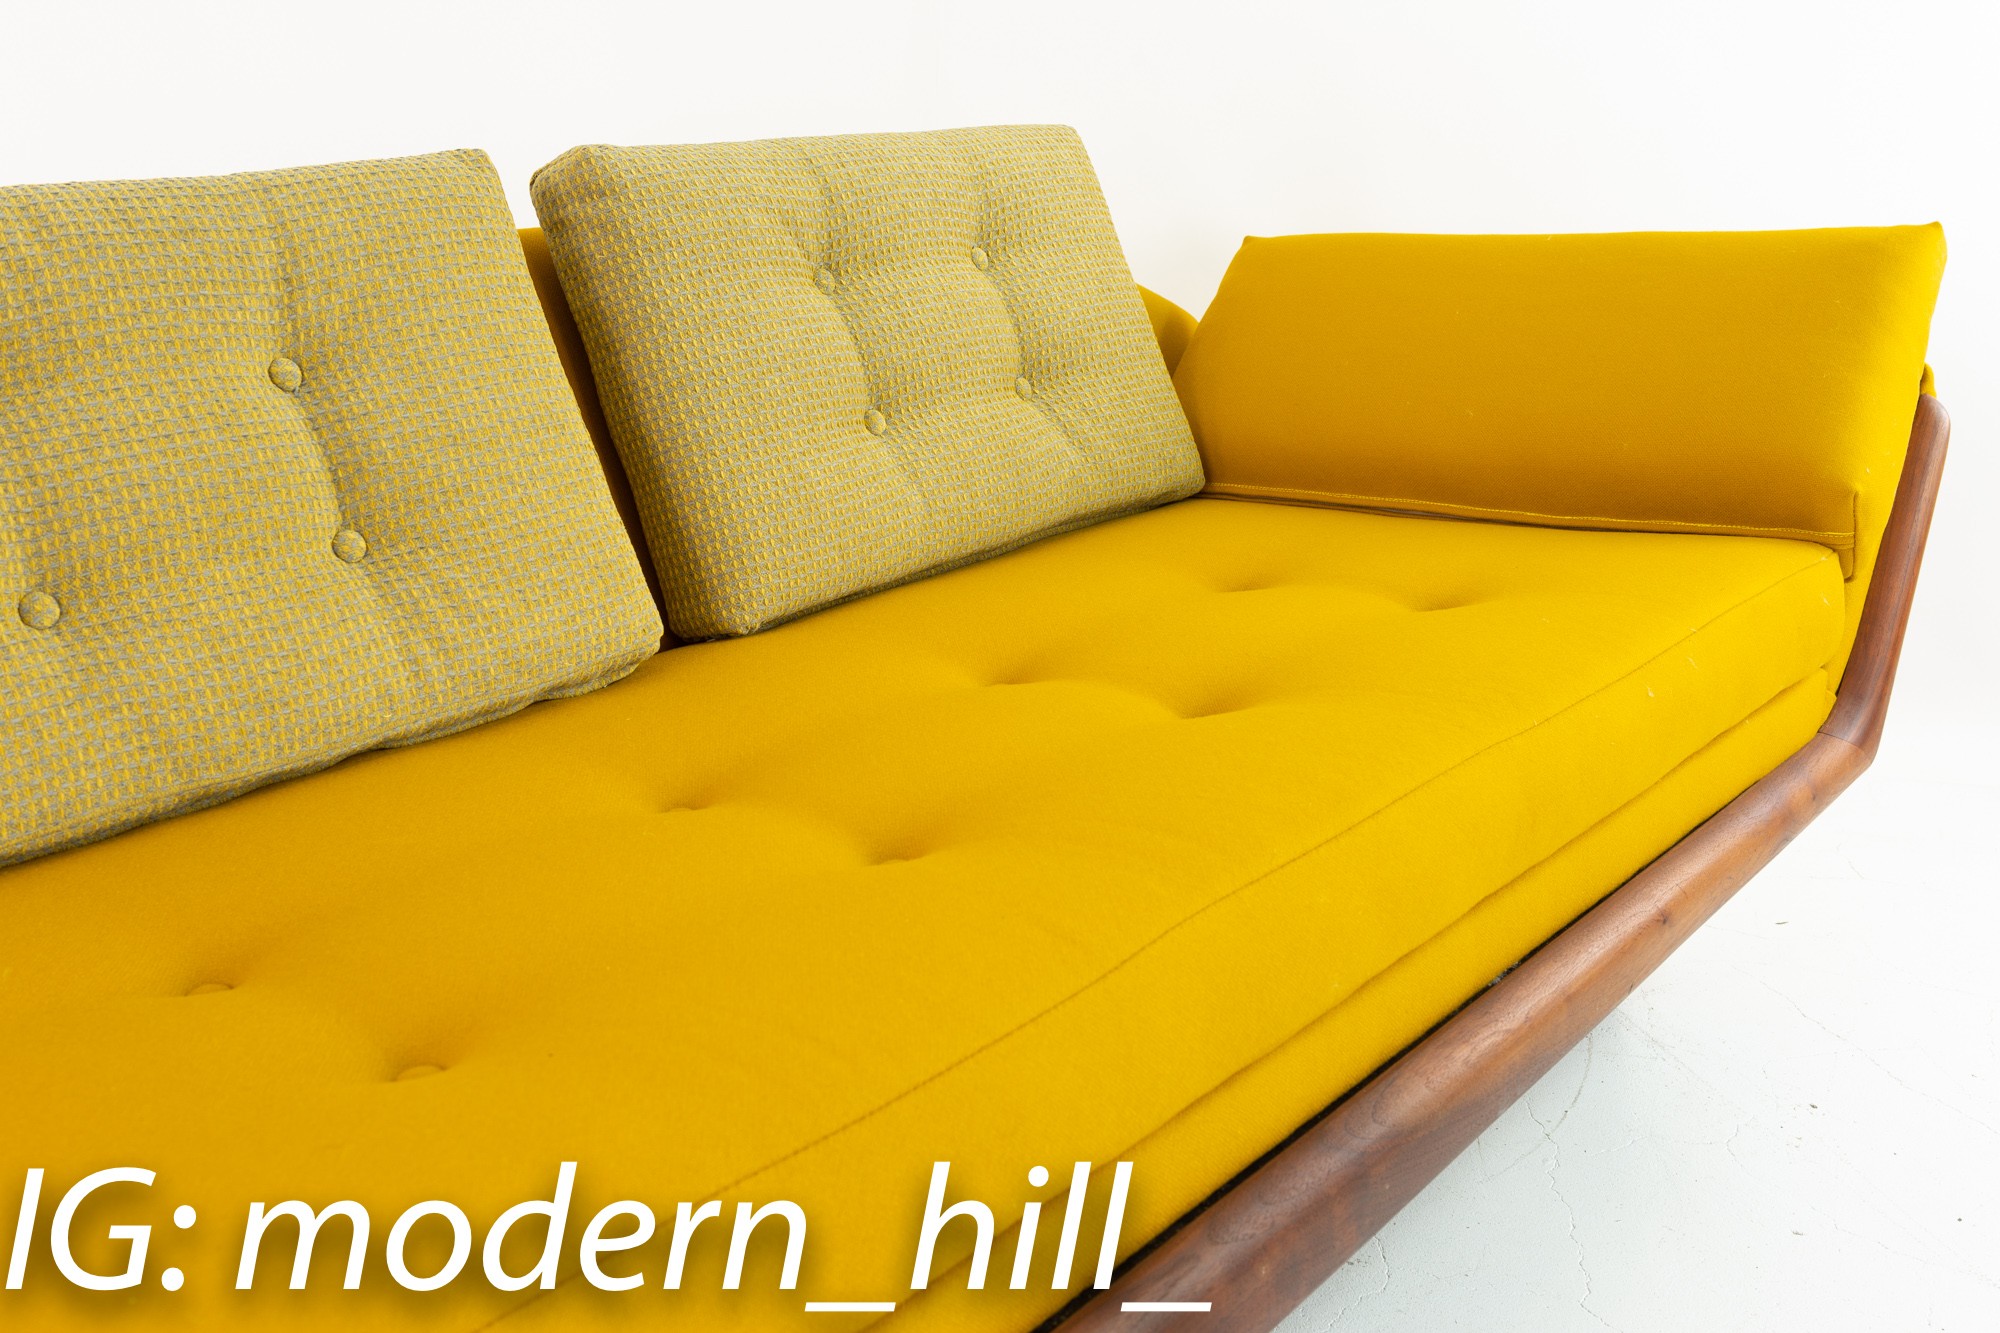 Re-upholstered Adrian Pearsall Mid Century Gondola Sofa